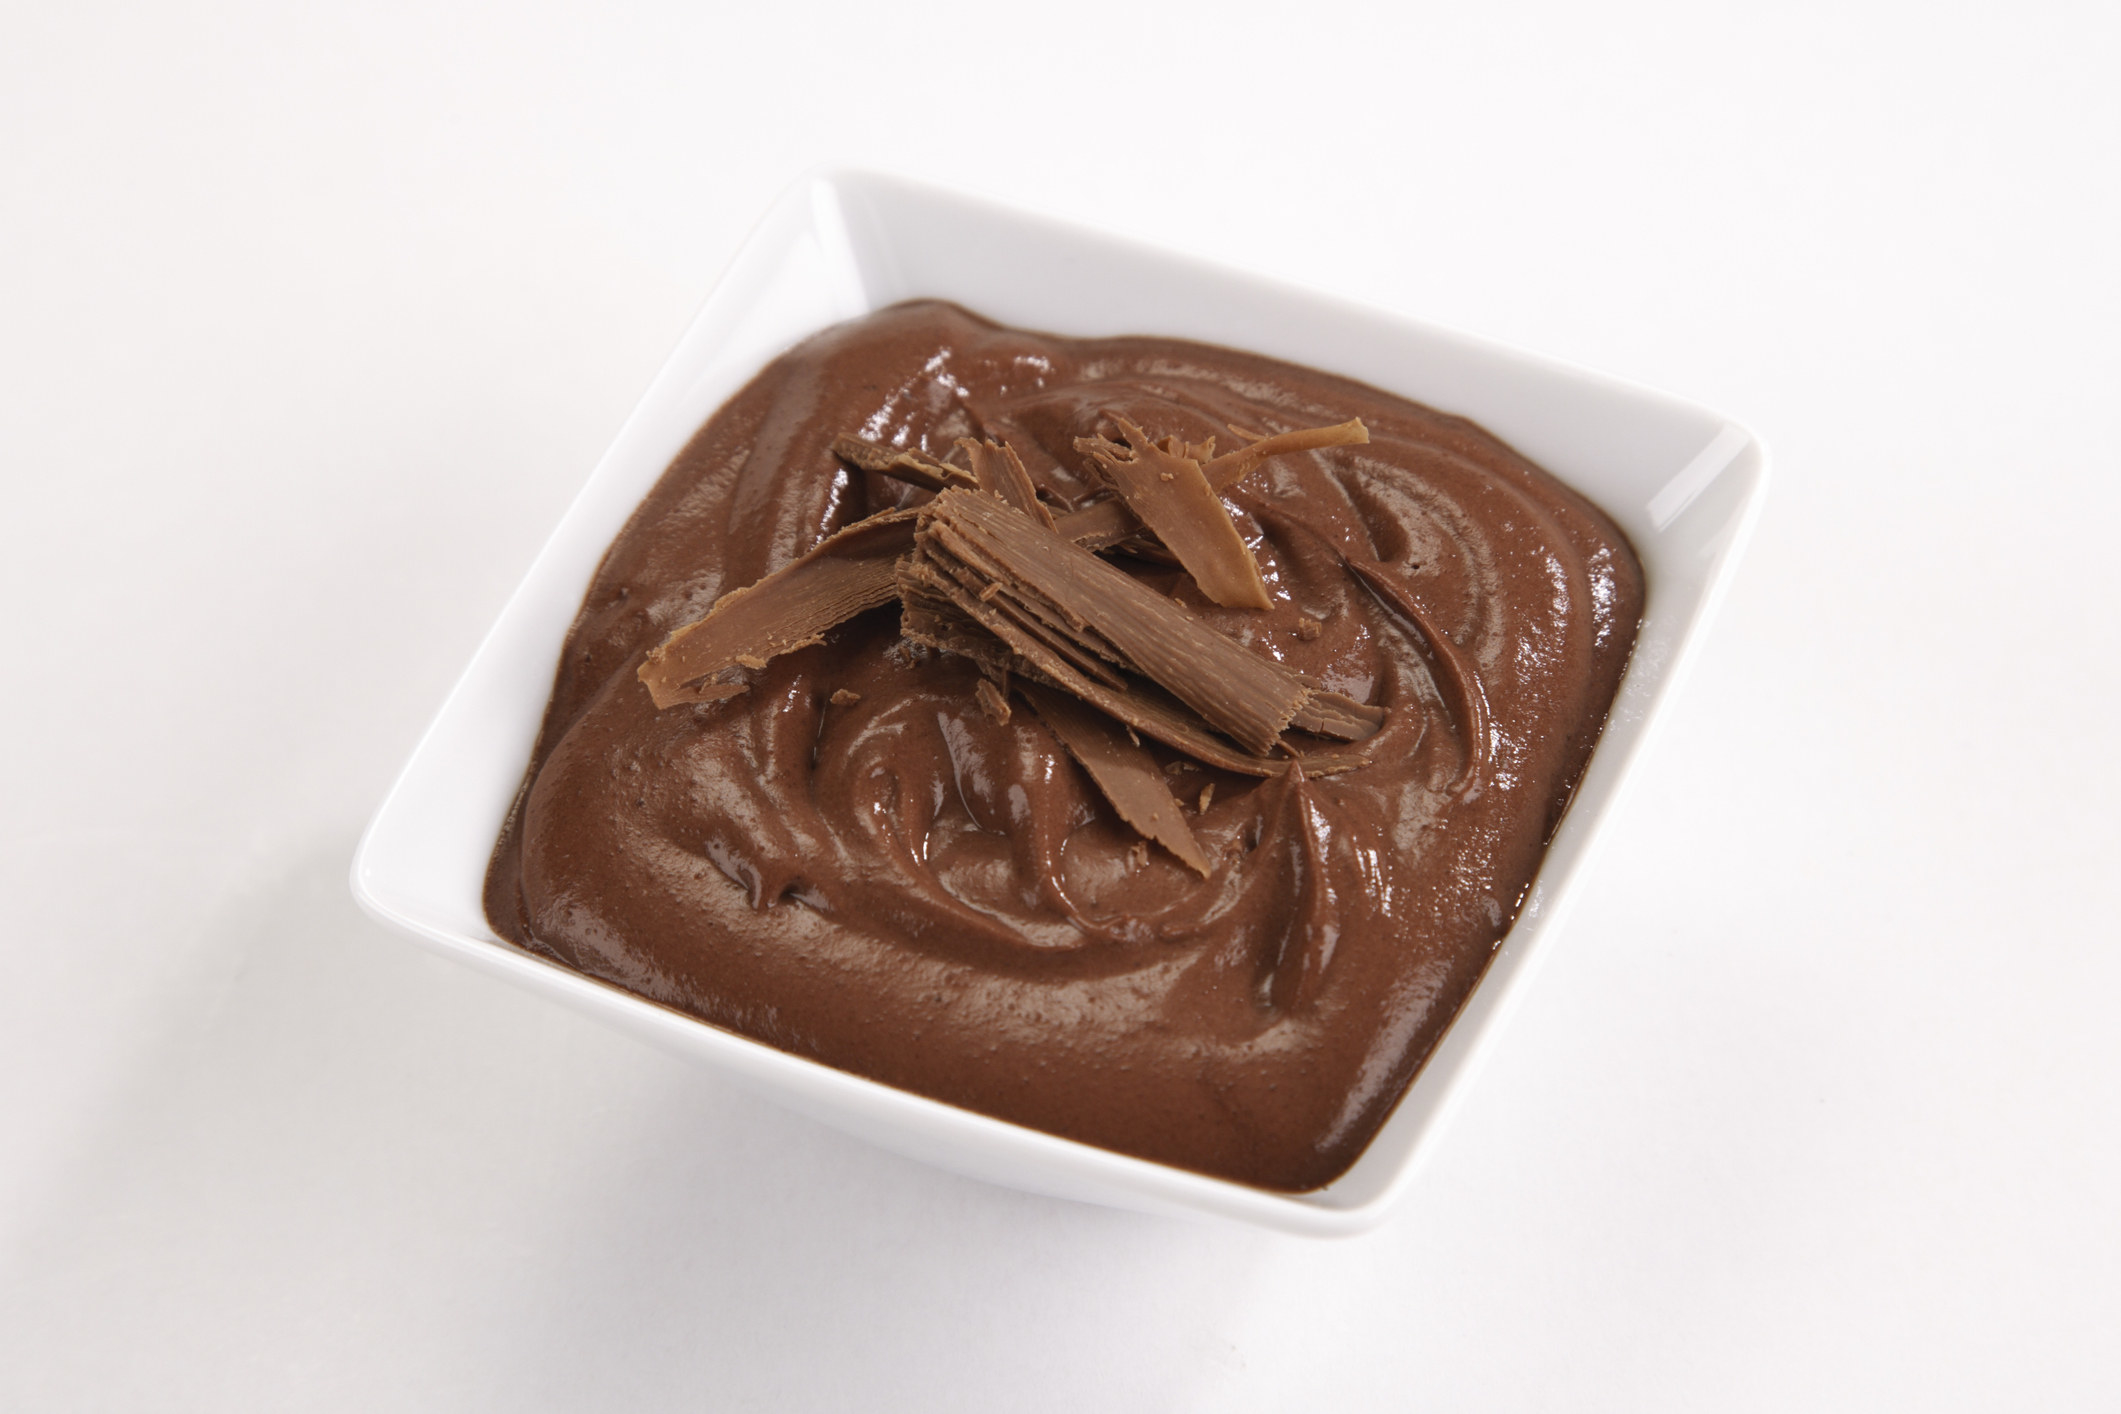 Hyper chocolate pudding. Hyper шоколадный пудинг. Шоколадное спа. Пудинг шоколадный верный. Sweet Nouns.